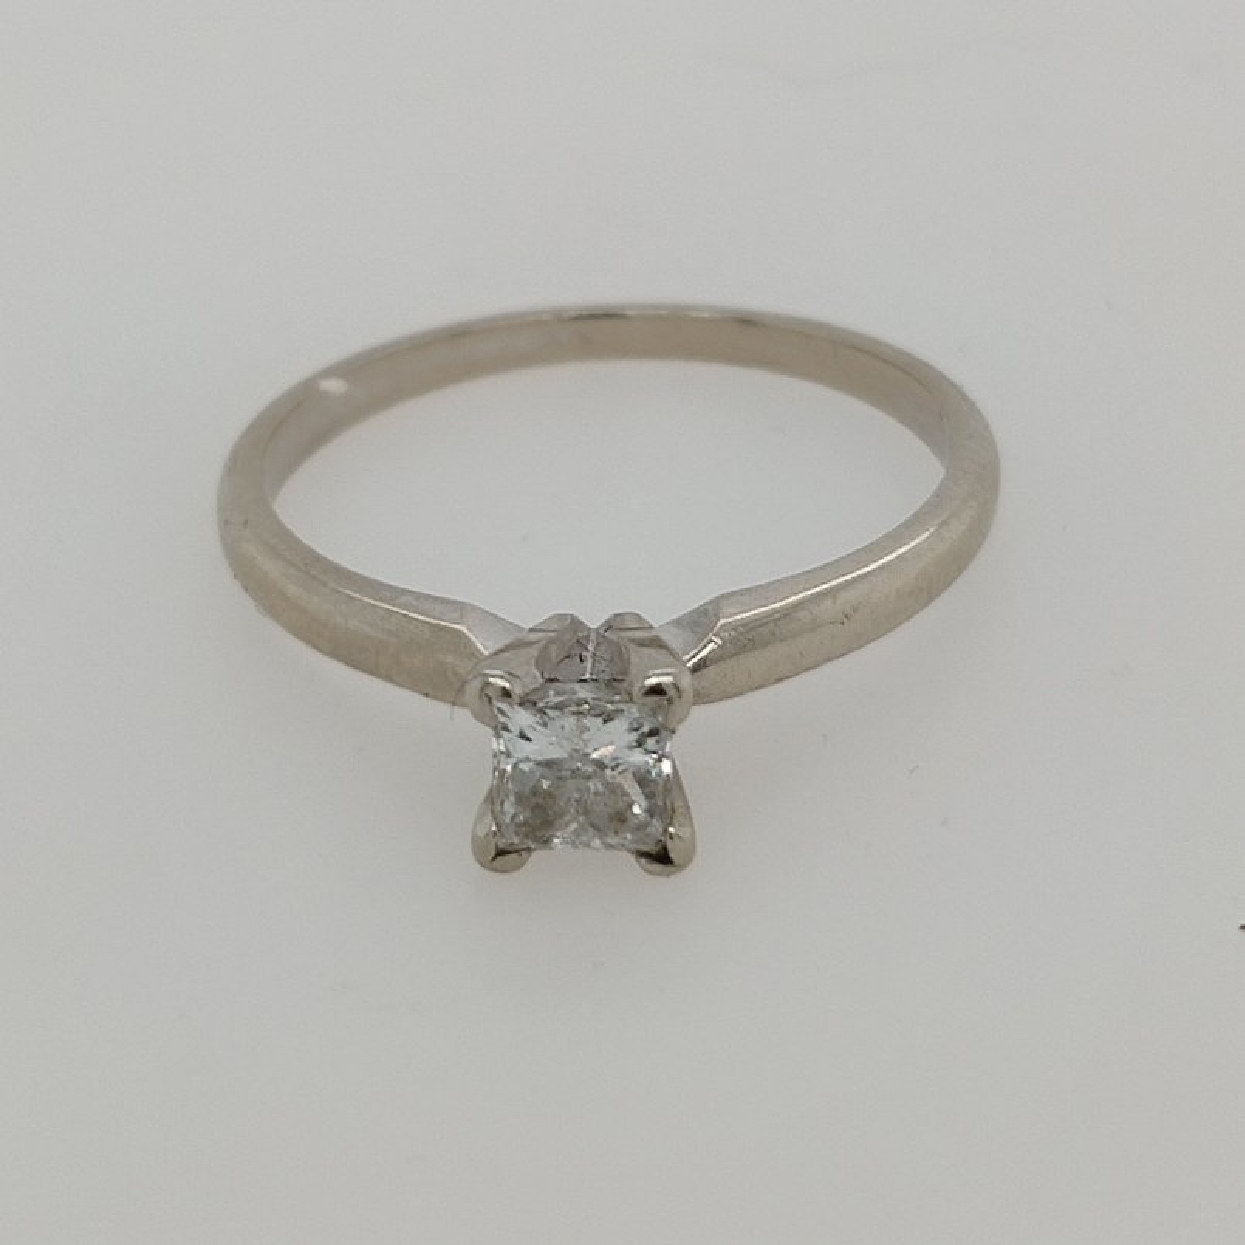 14K White Gold Princess Cut Solitaire Engagement Ring; Size 7
0.47CTTW